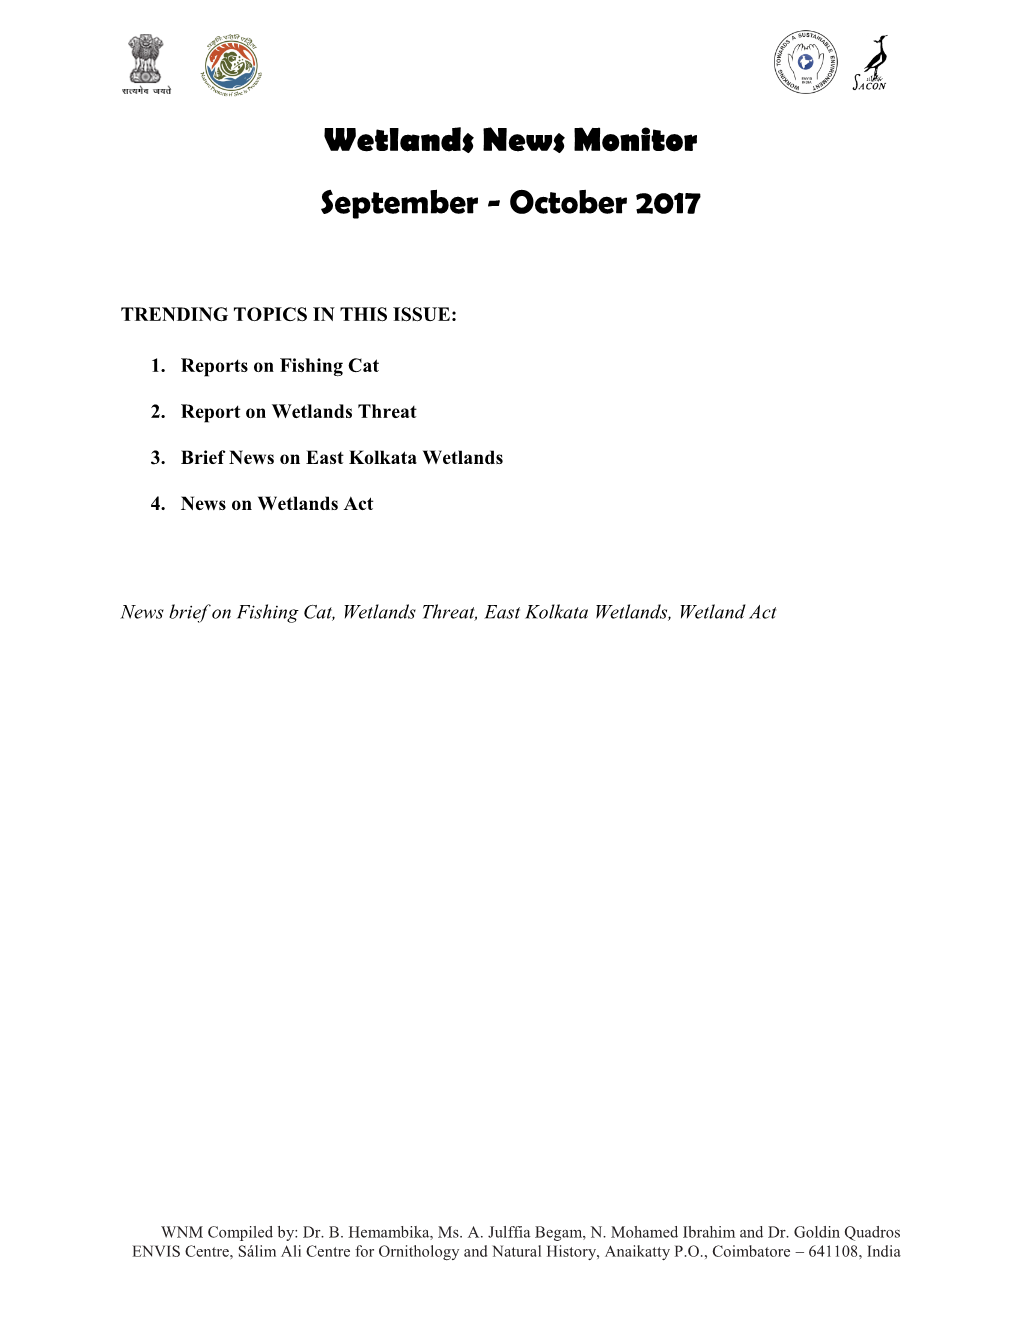 Wetlands News Monitor September - October 2017